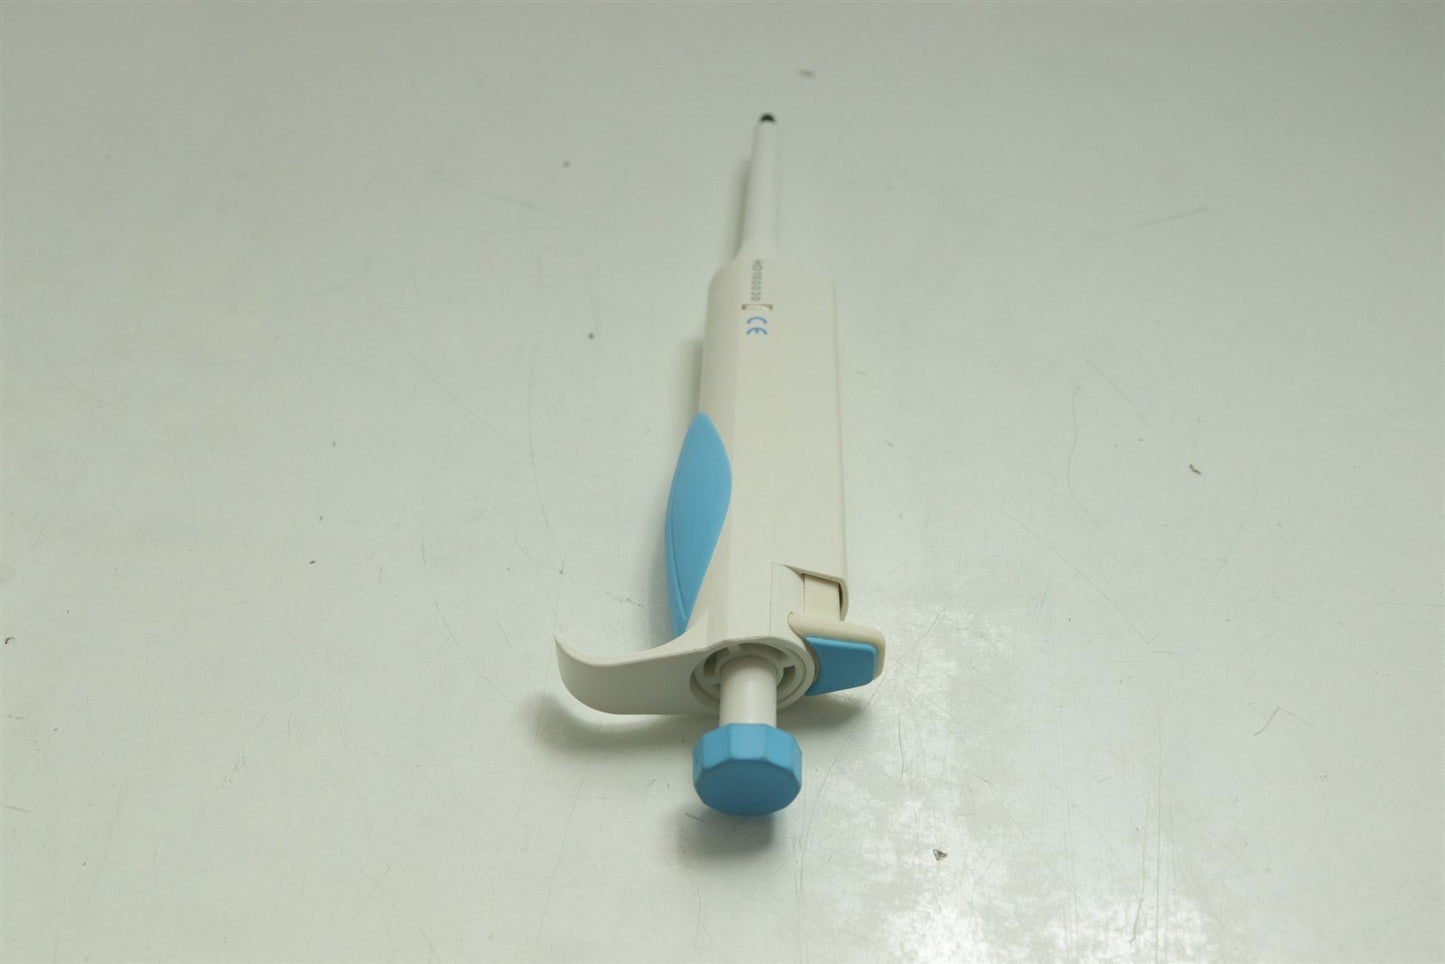 Accumax Pro Research Micro Pipette With Smart Grip